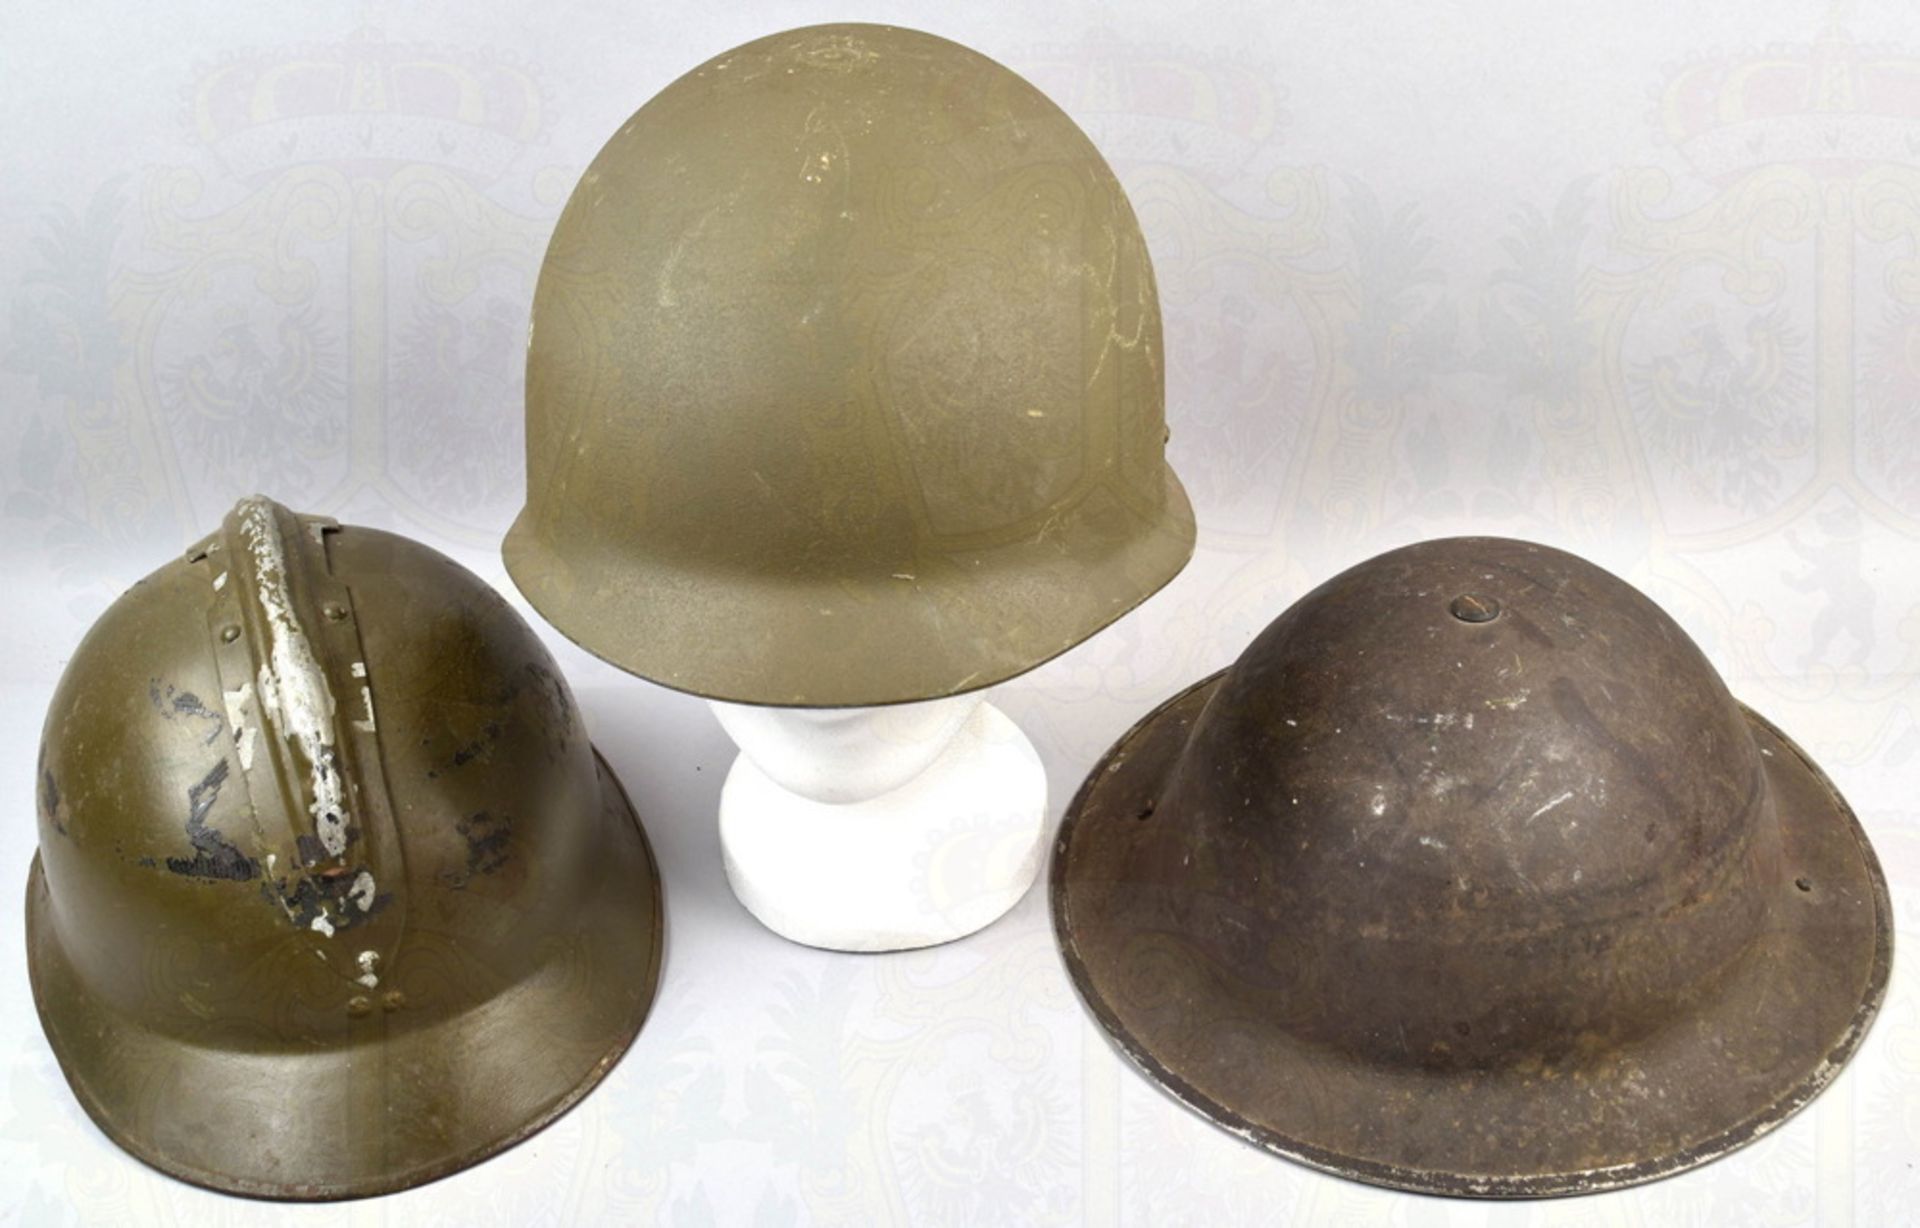 3 steel helmets/combat helmets Germany/France/UK